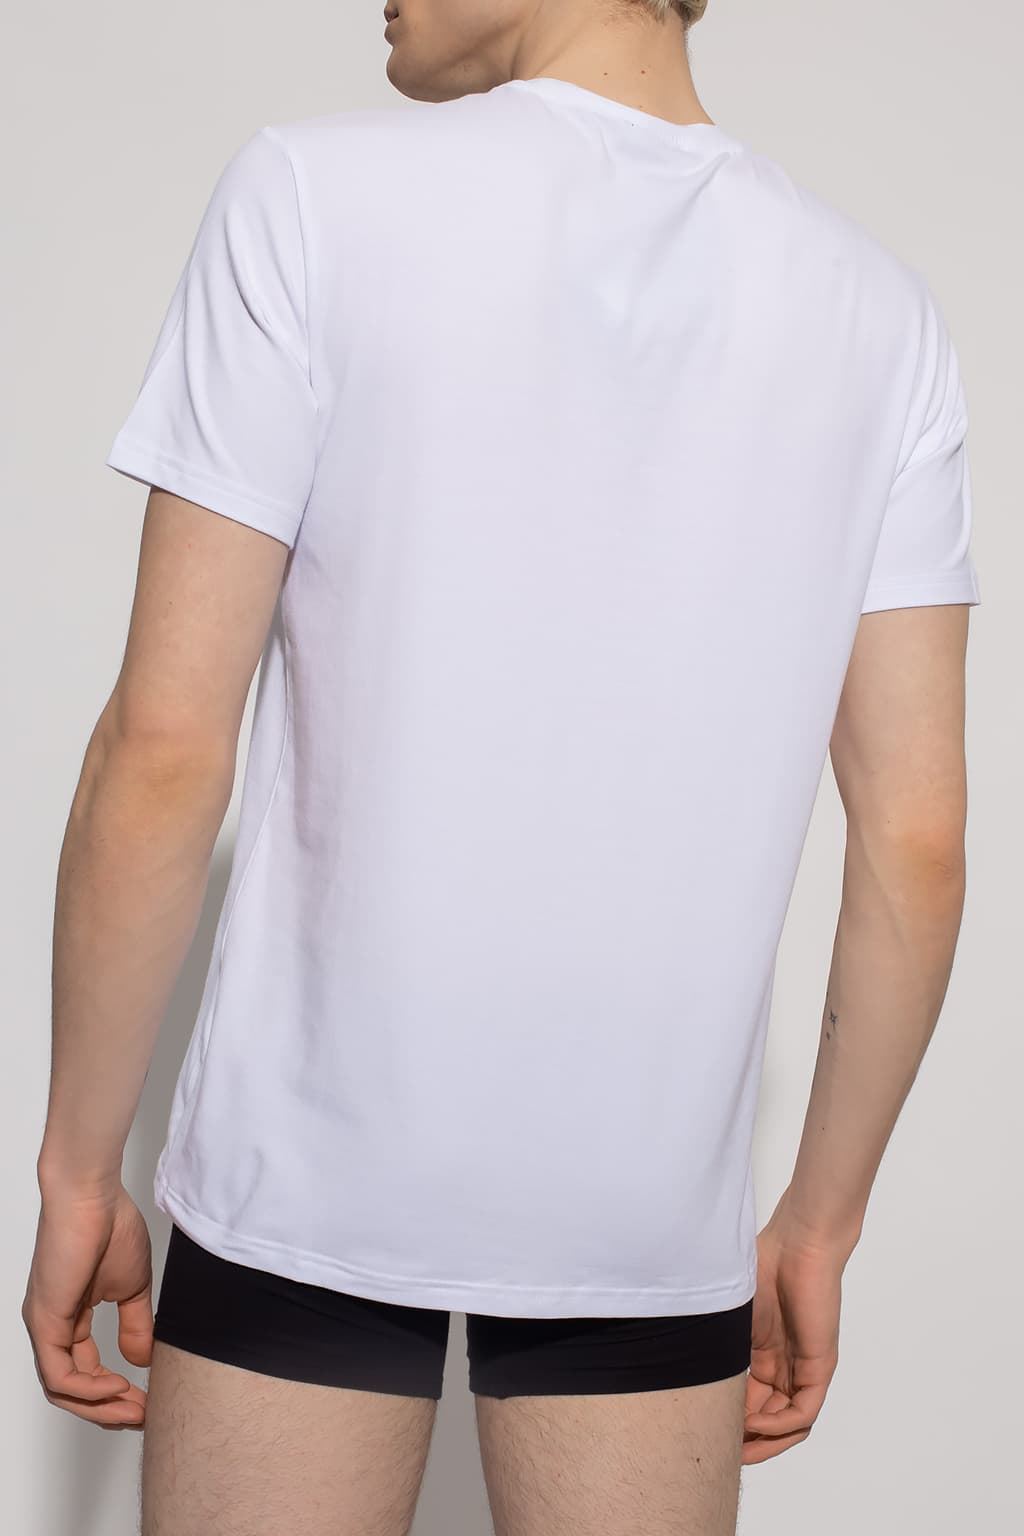 Camiseta Emporio Armani 110853 2R525 00010 blanco - Imagen 2